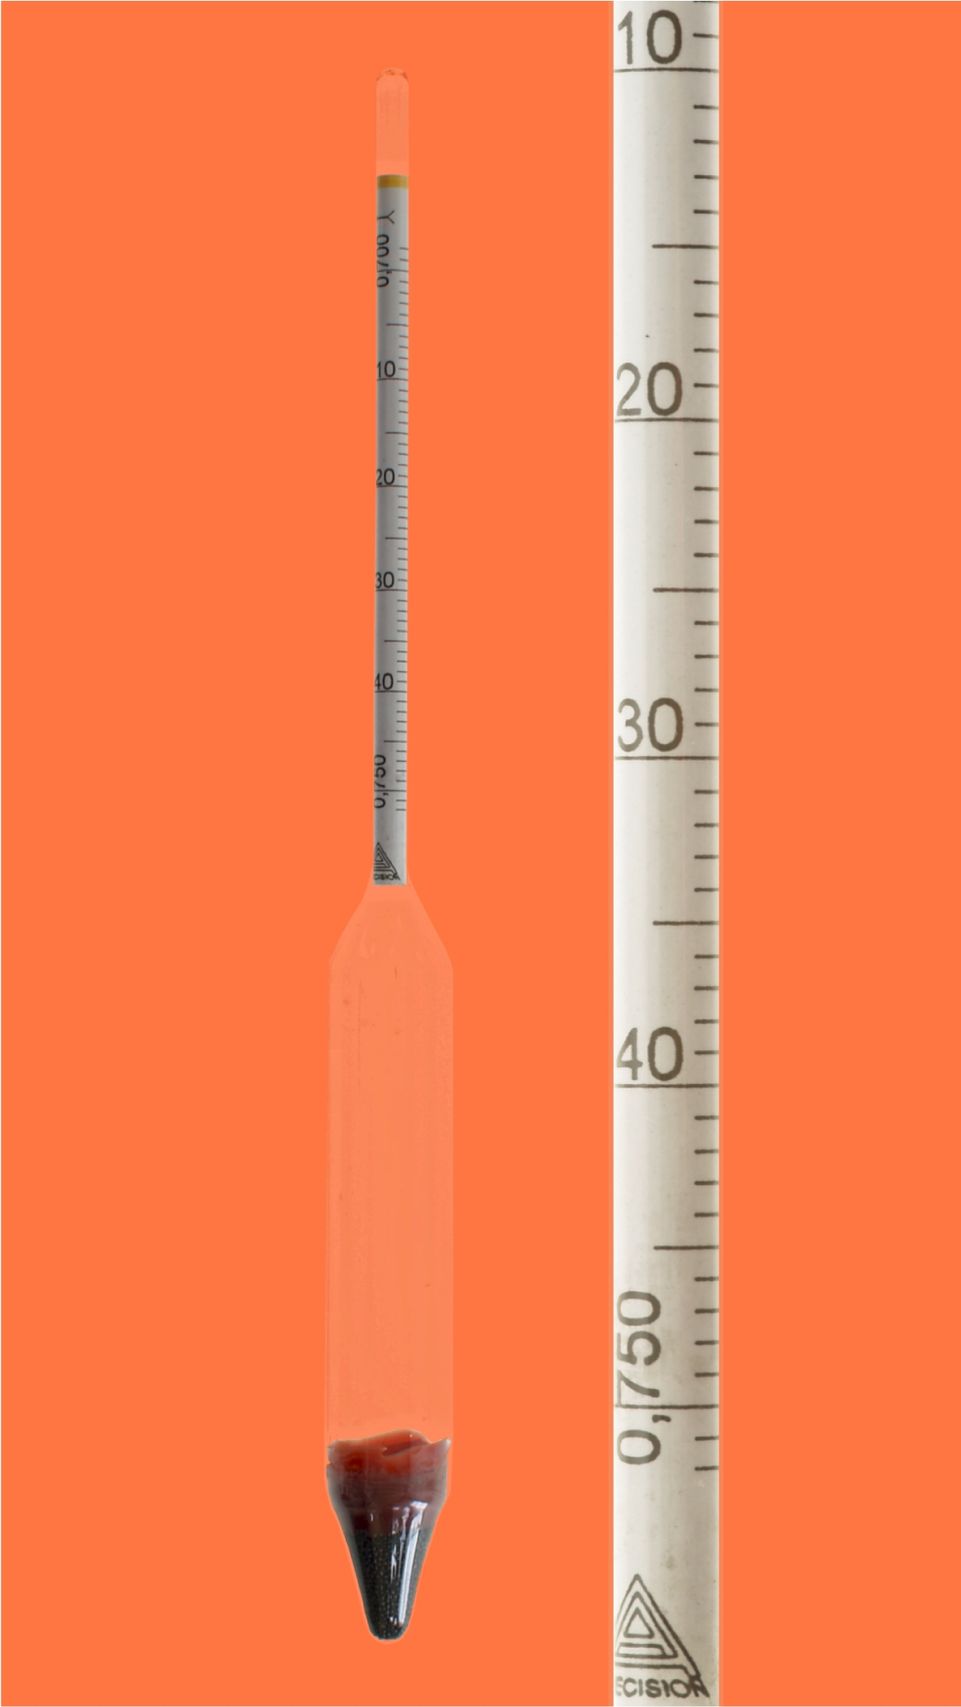 Aräometer, DIN 12791, M50, 0,60-0,65:0,0010g/cm³, Bezugstemp. 20°C, ohne Thermometer